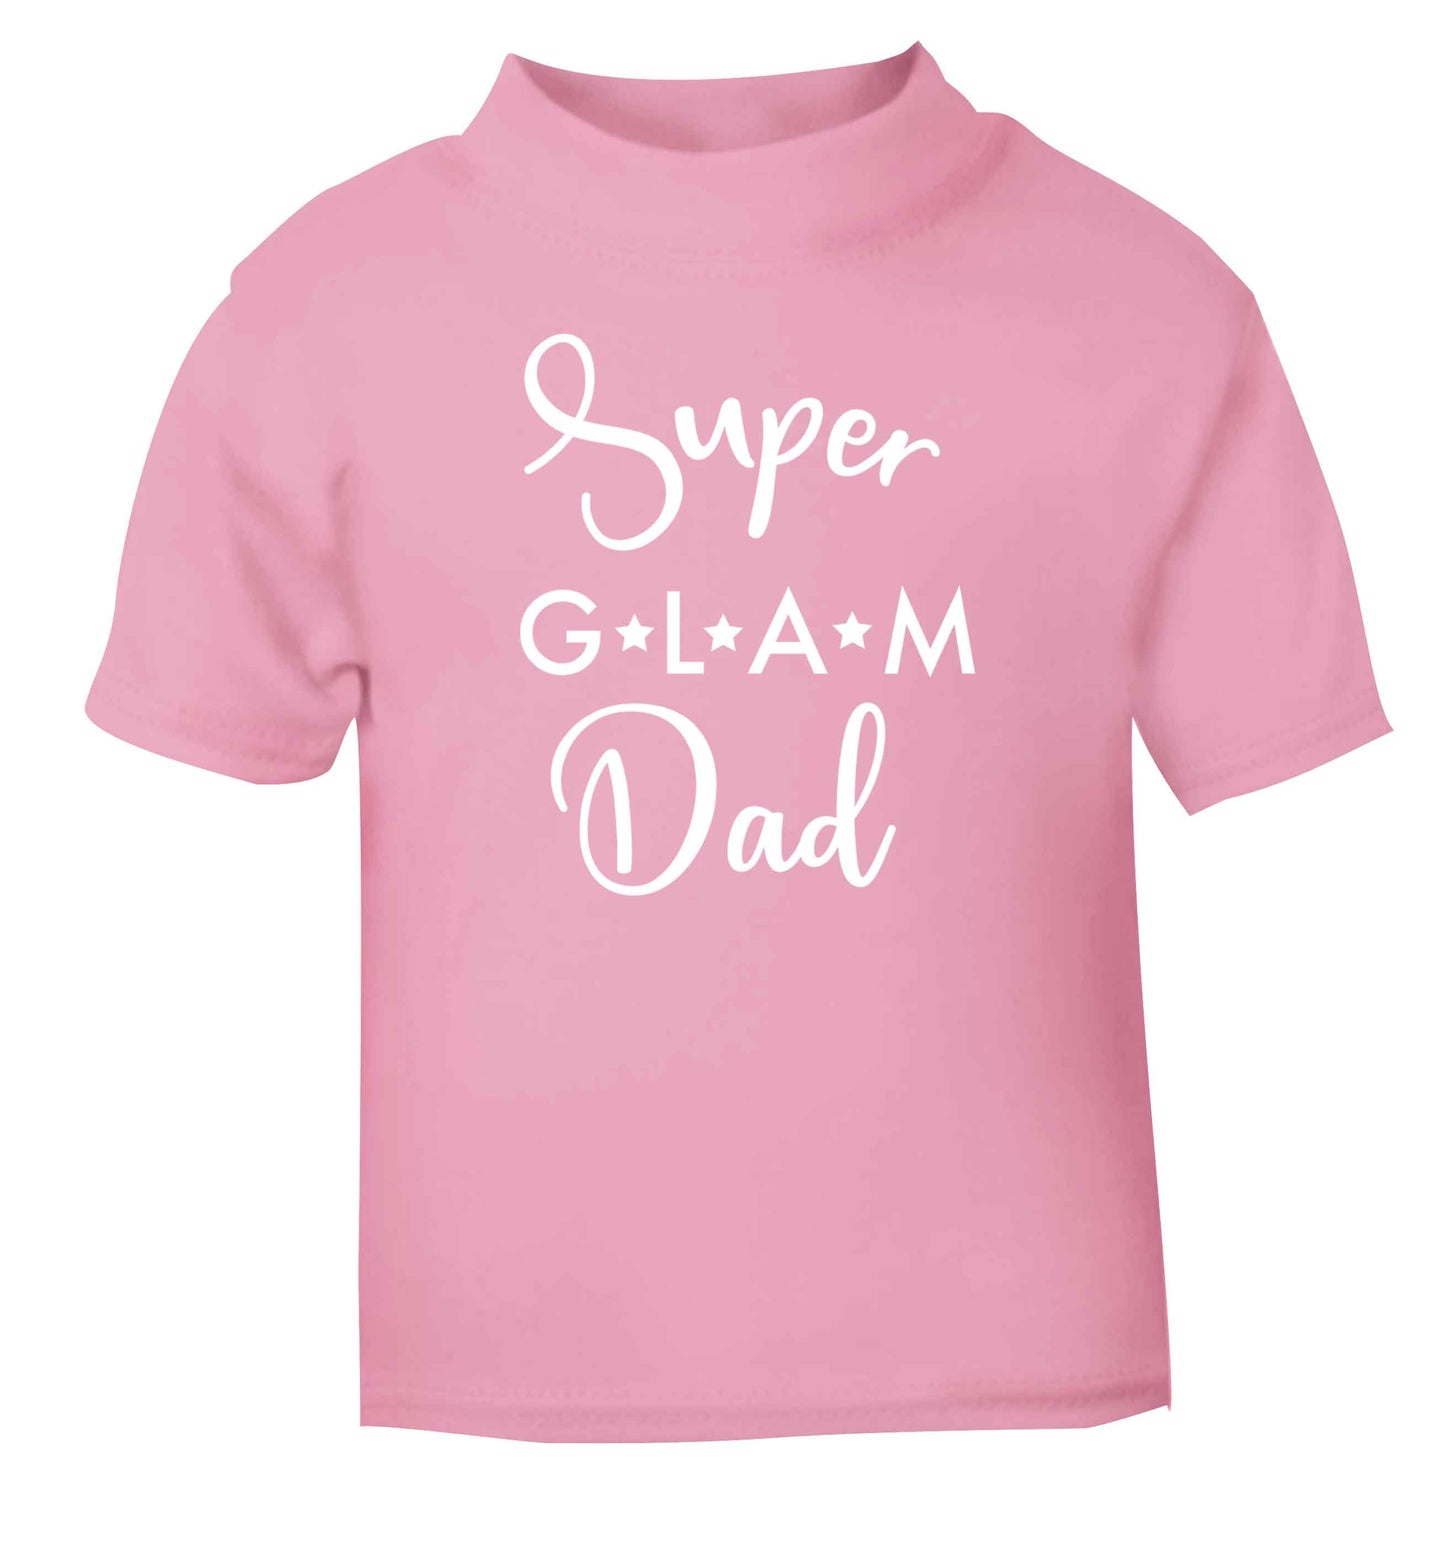 Super glam Dad light pink Baby Toddler Tshirt 2 Years